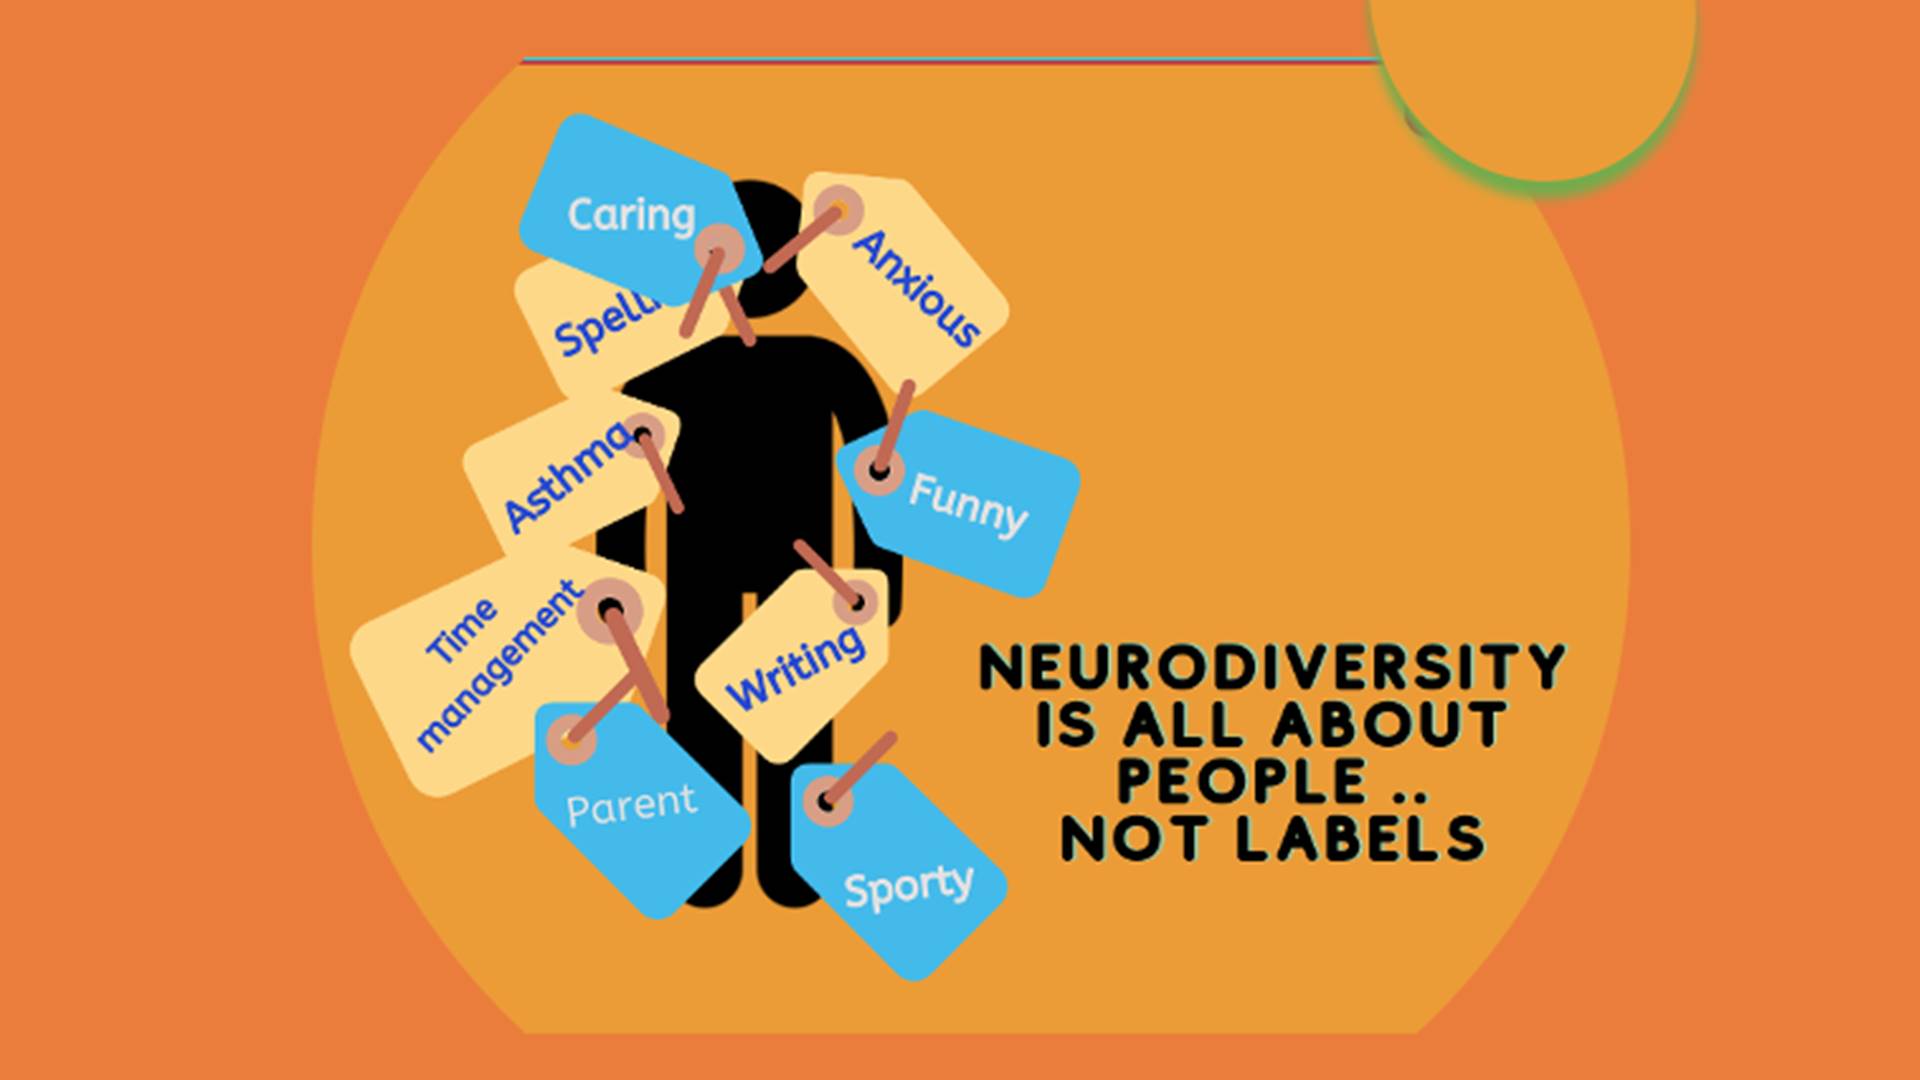 Neurodiversity- let's embrace our ‘spiky profiles’